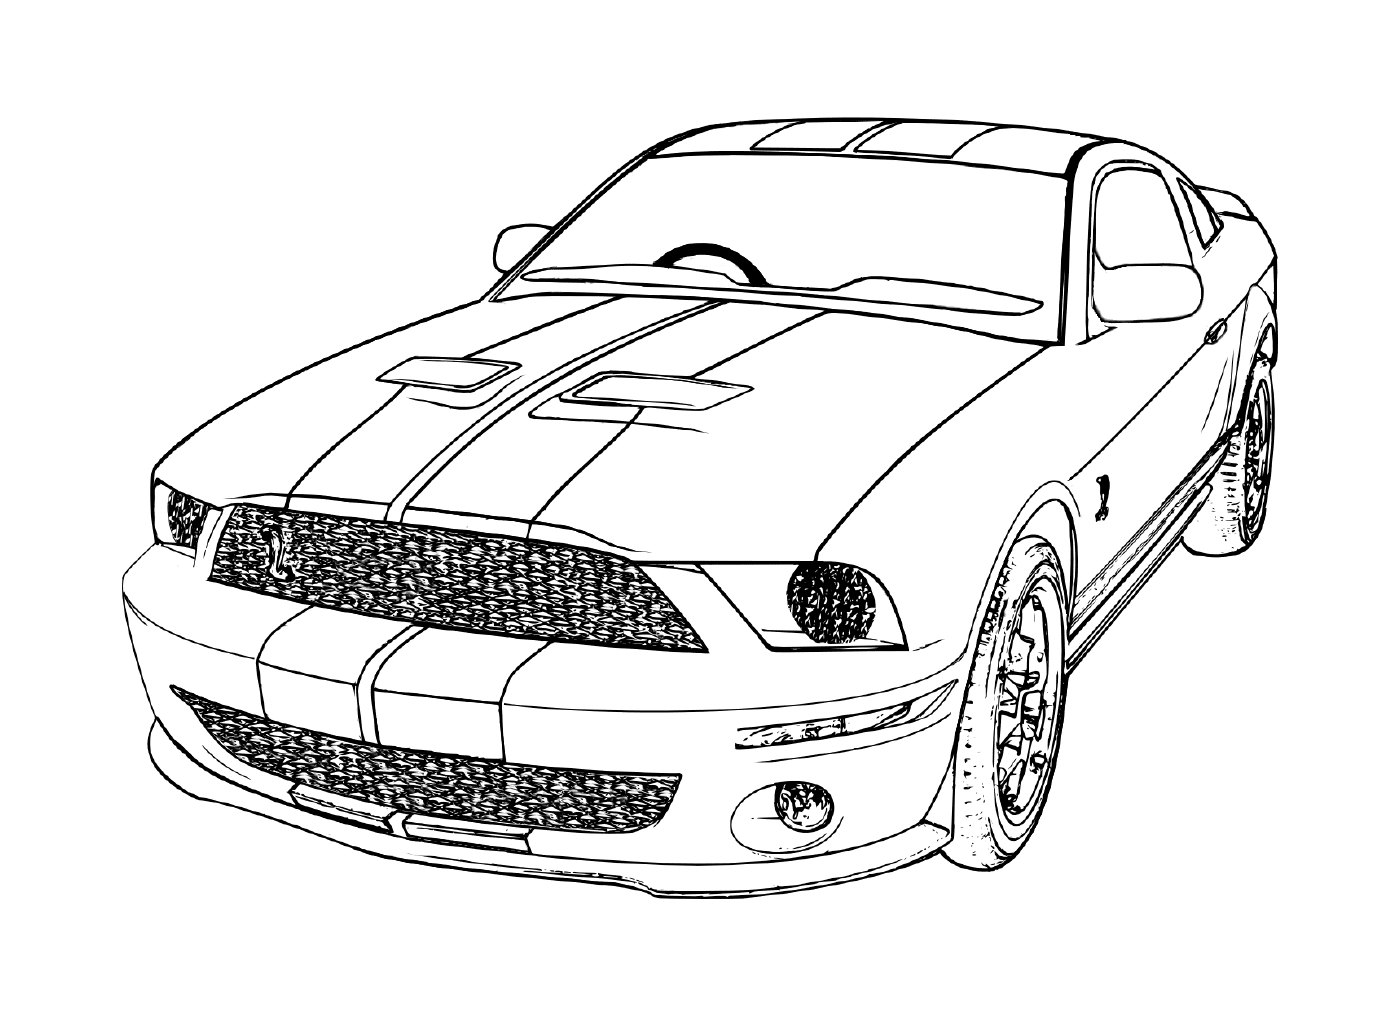  Ford Mustang racing car 